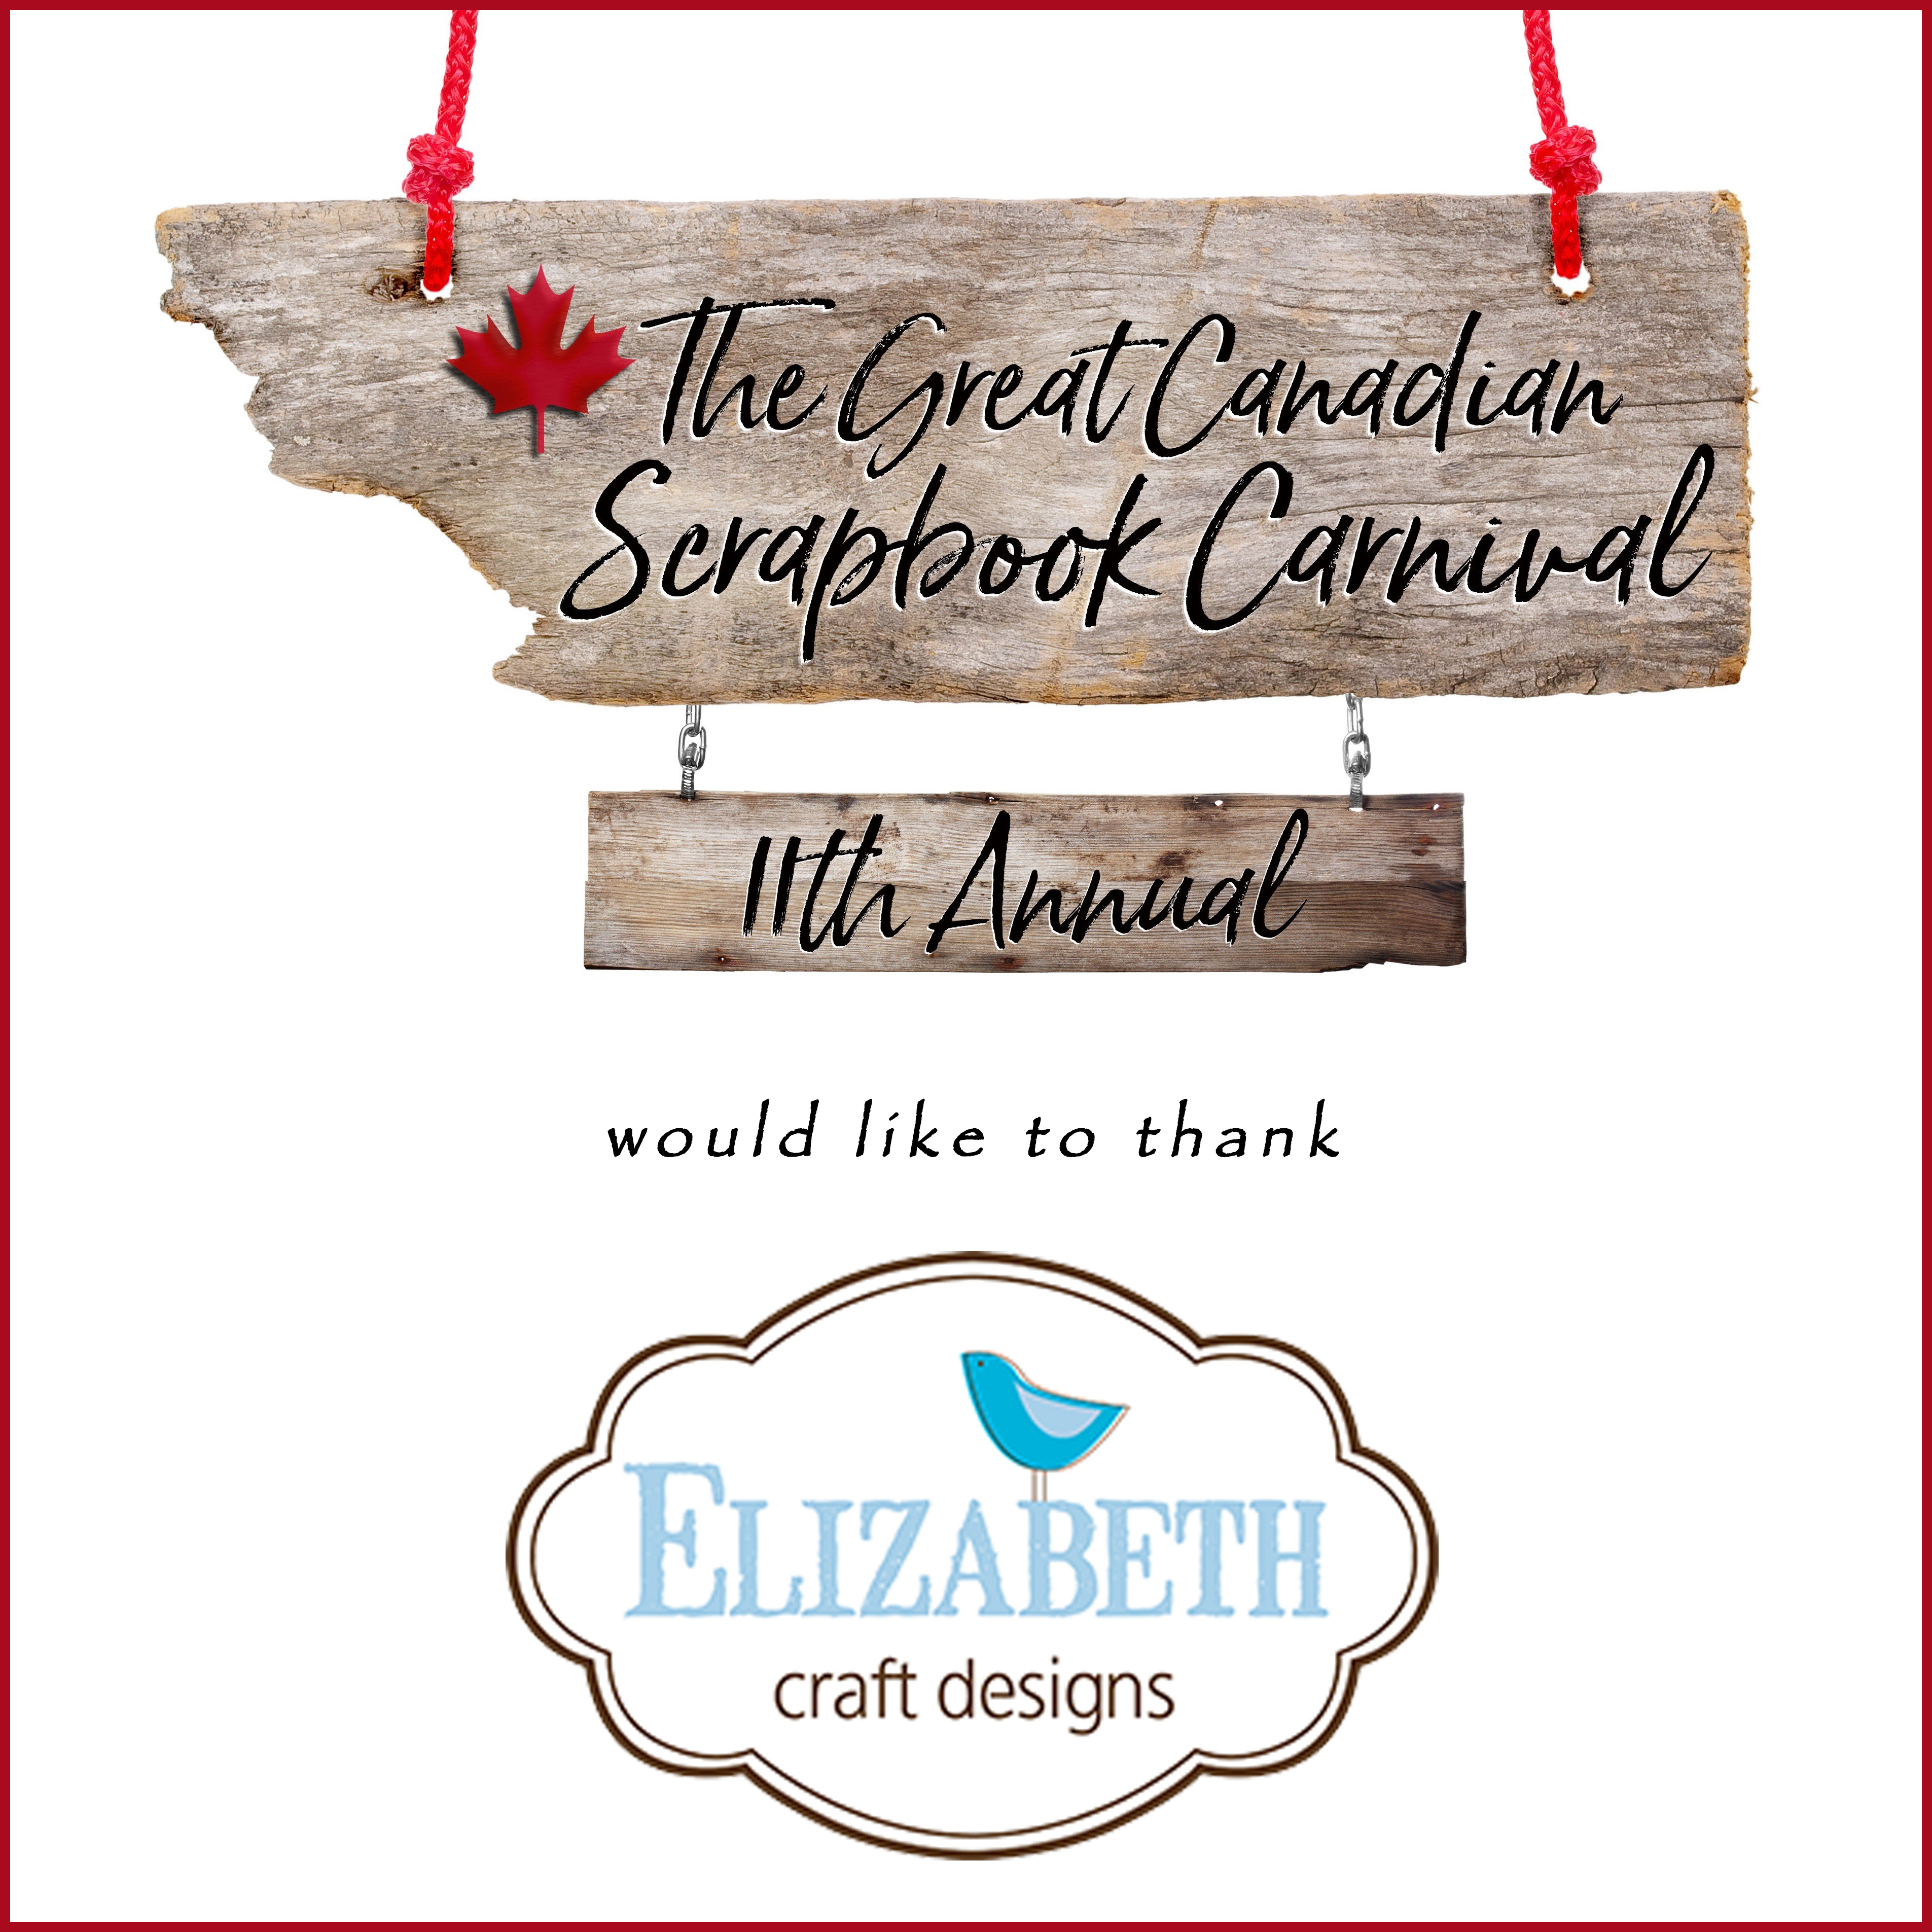 Great Canadian Scrapbook Carnival / Thank You Elizabeth raft Designs